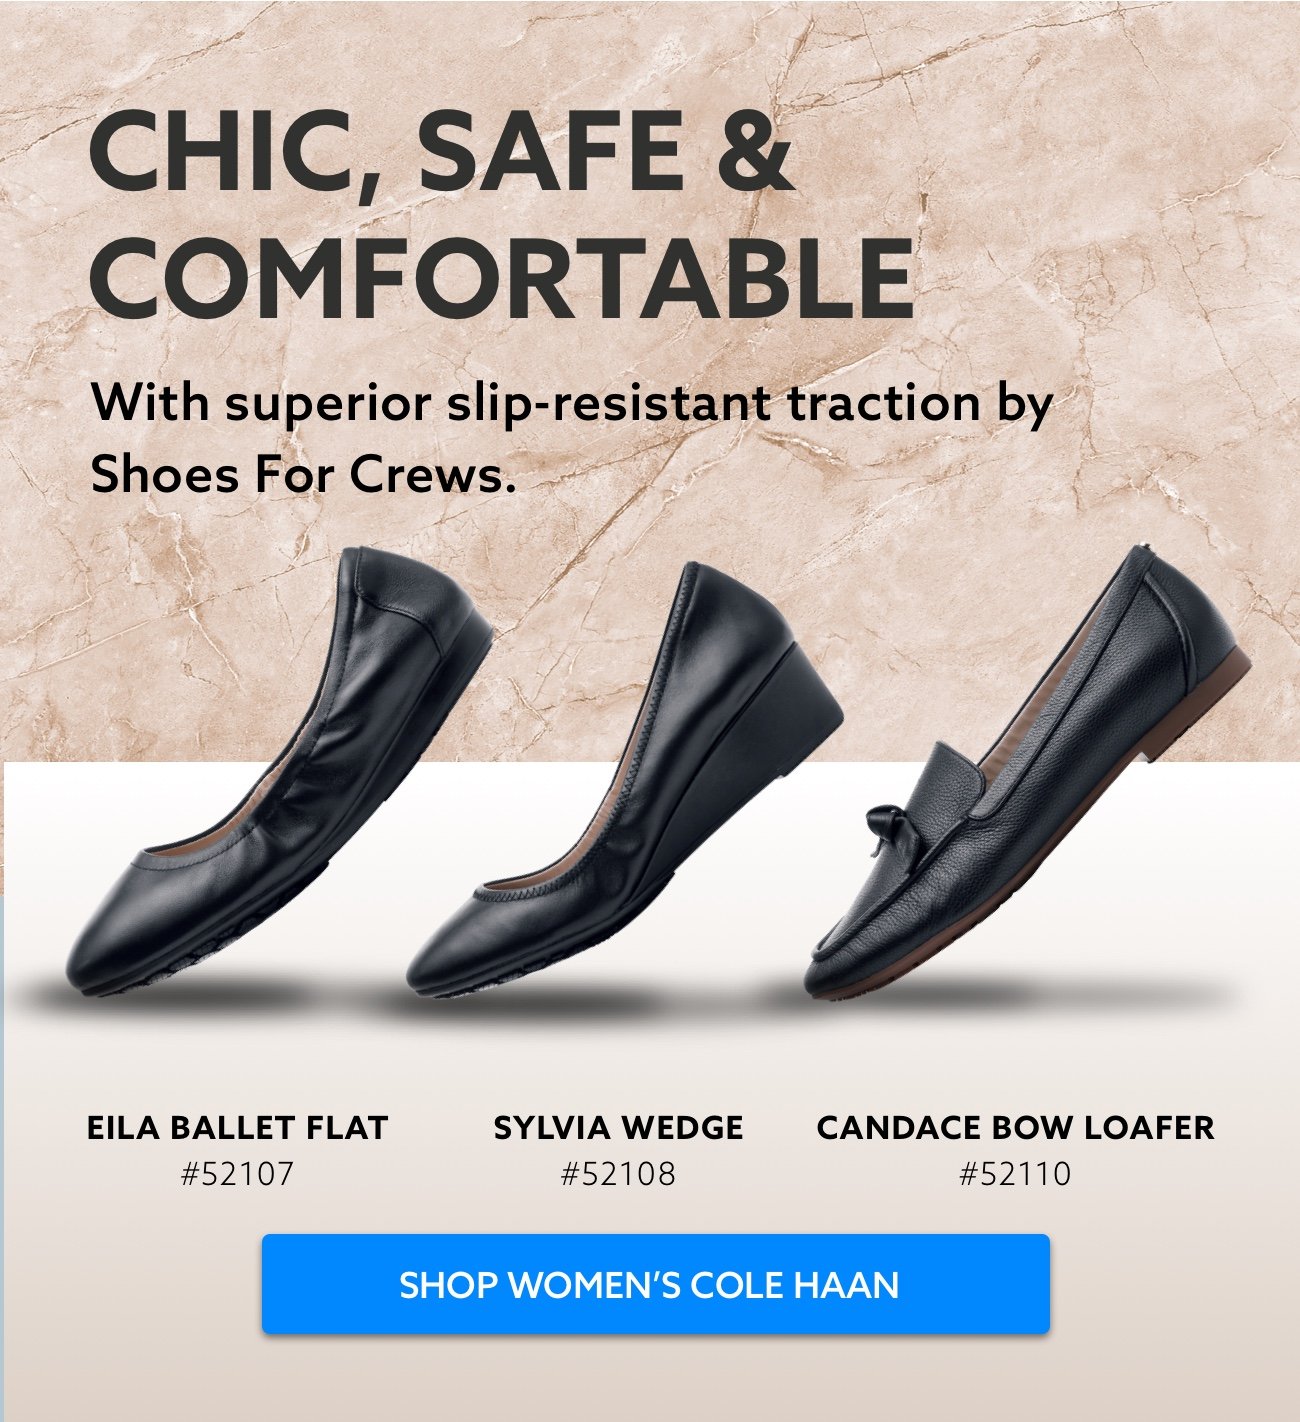 Chic, safe & comfortable | Shop Women's Cole Haan